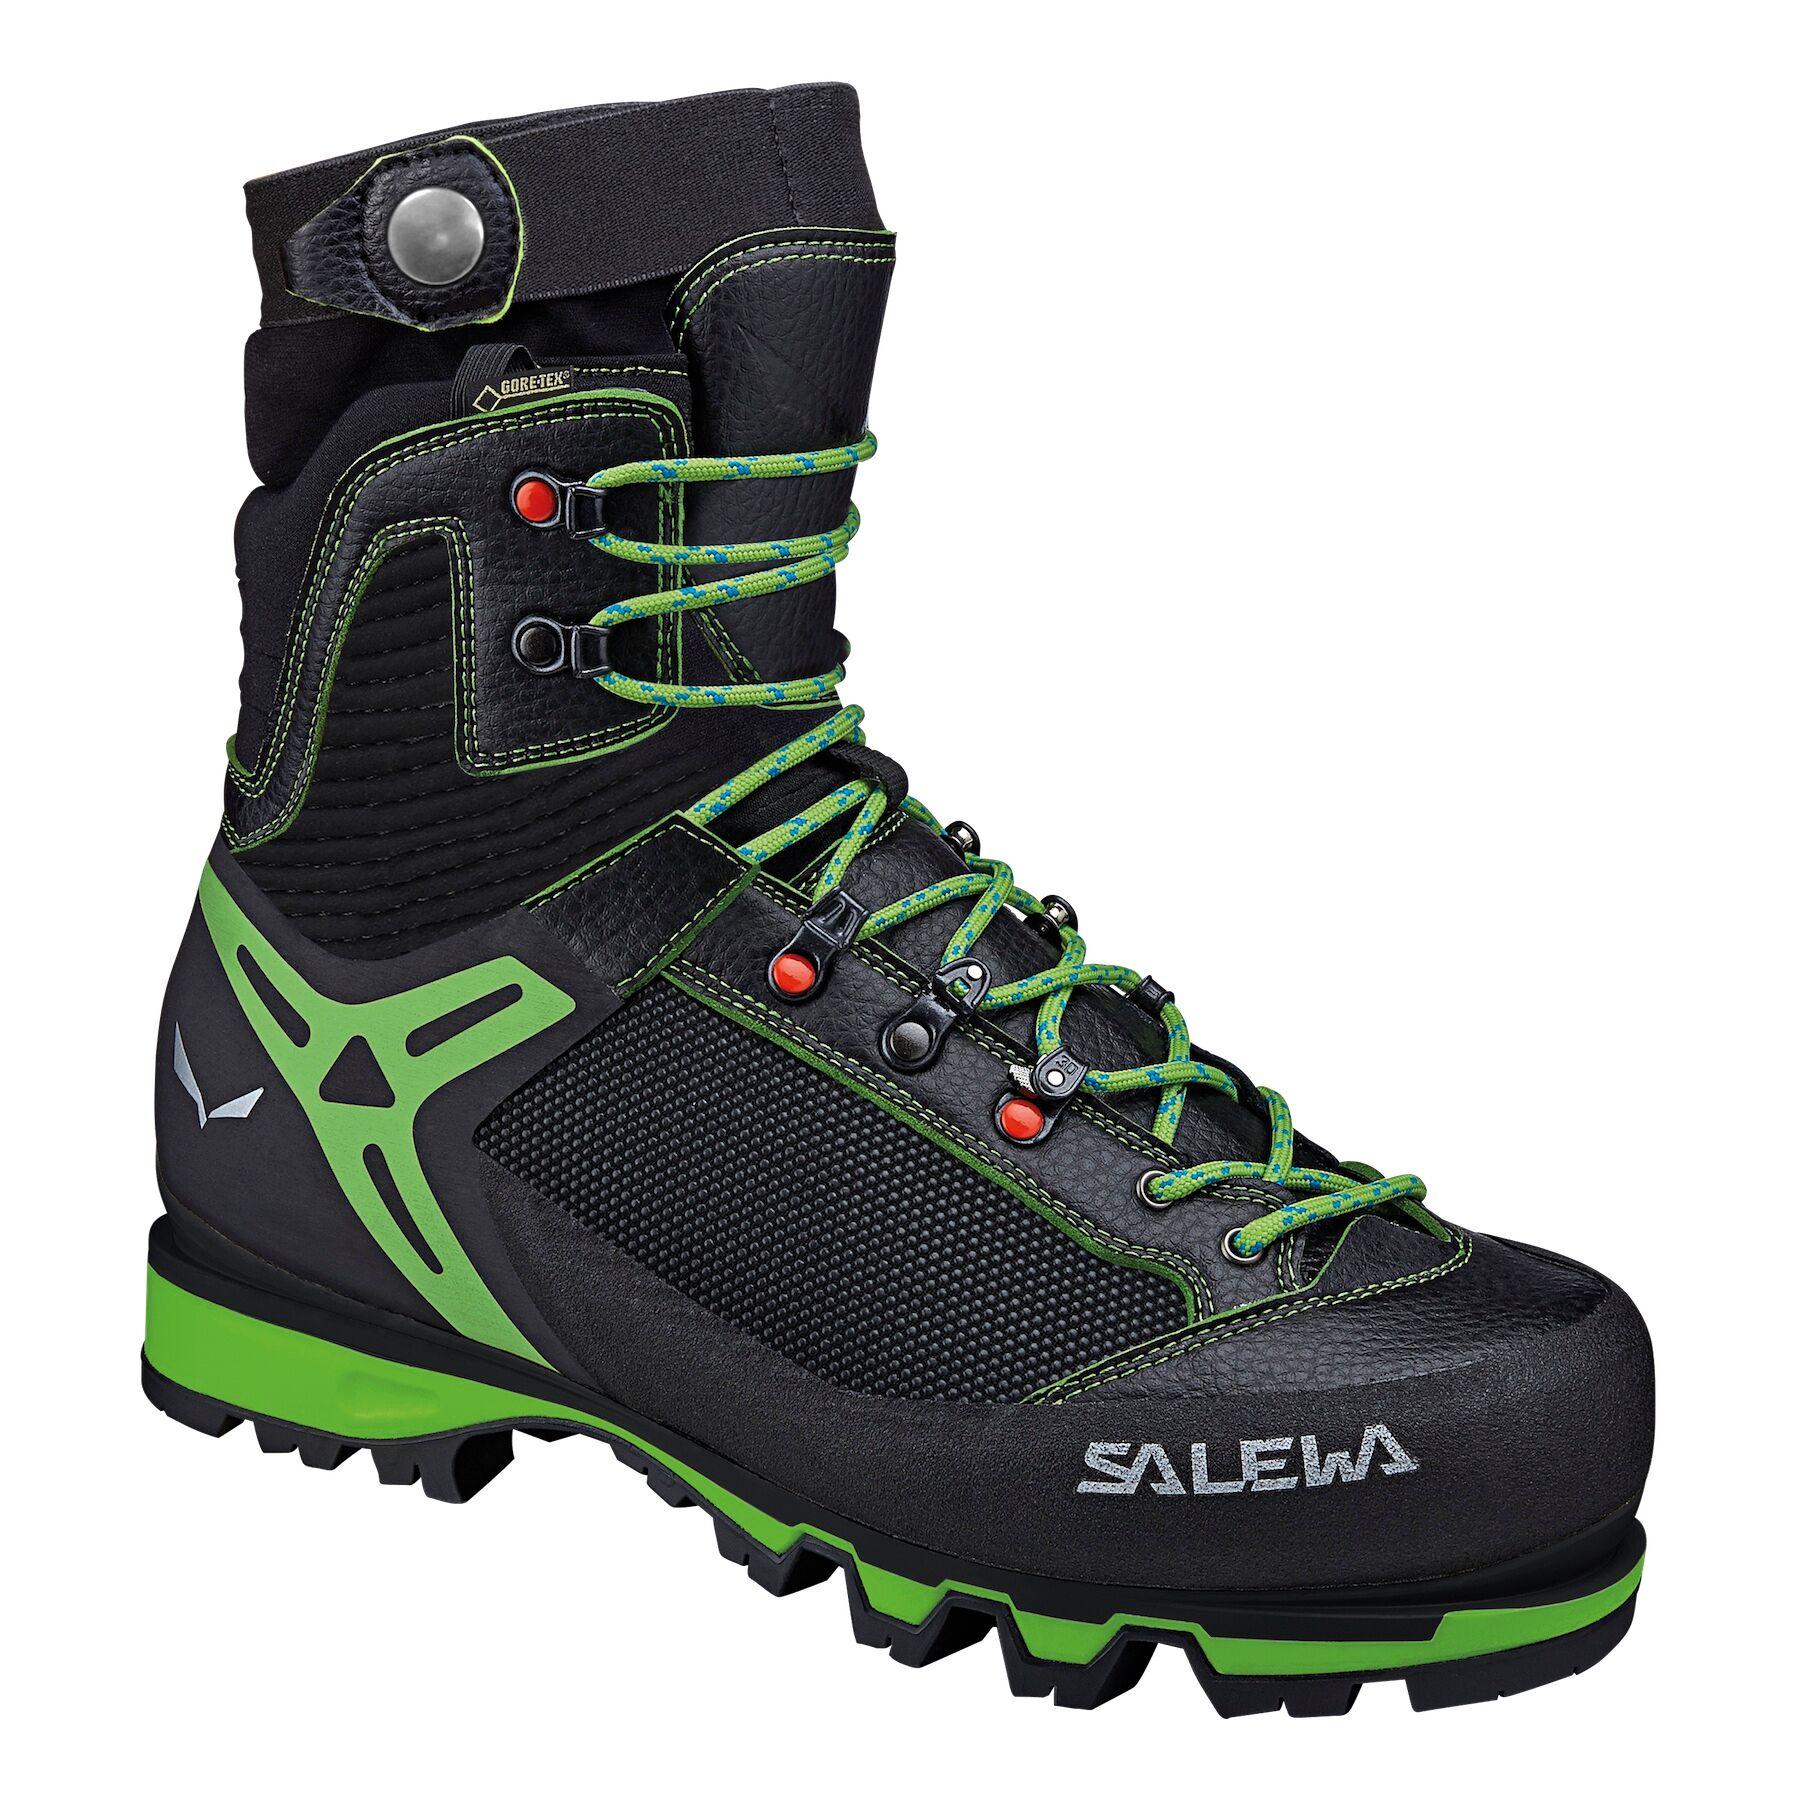 Salewa - Ms Vultur Vertical GTX - Mountaineering Boots - Men's